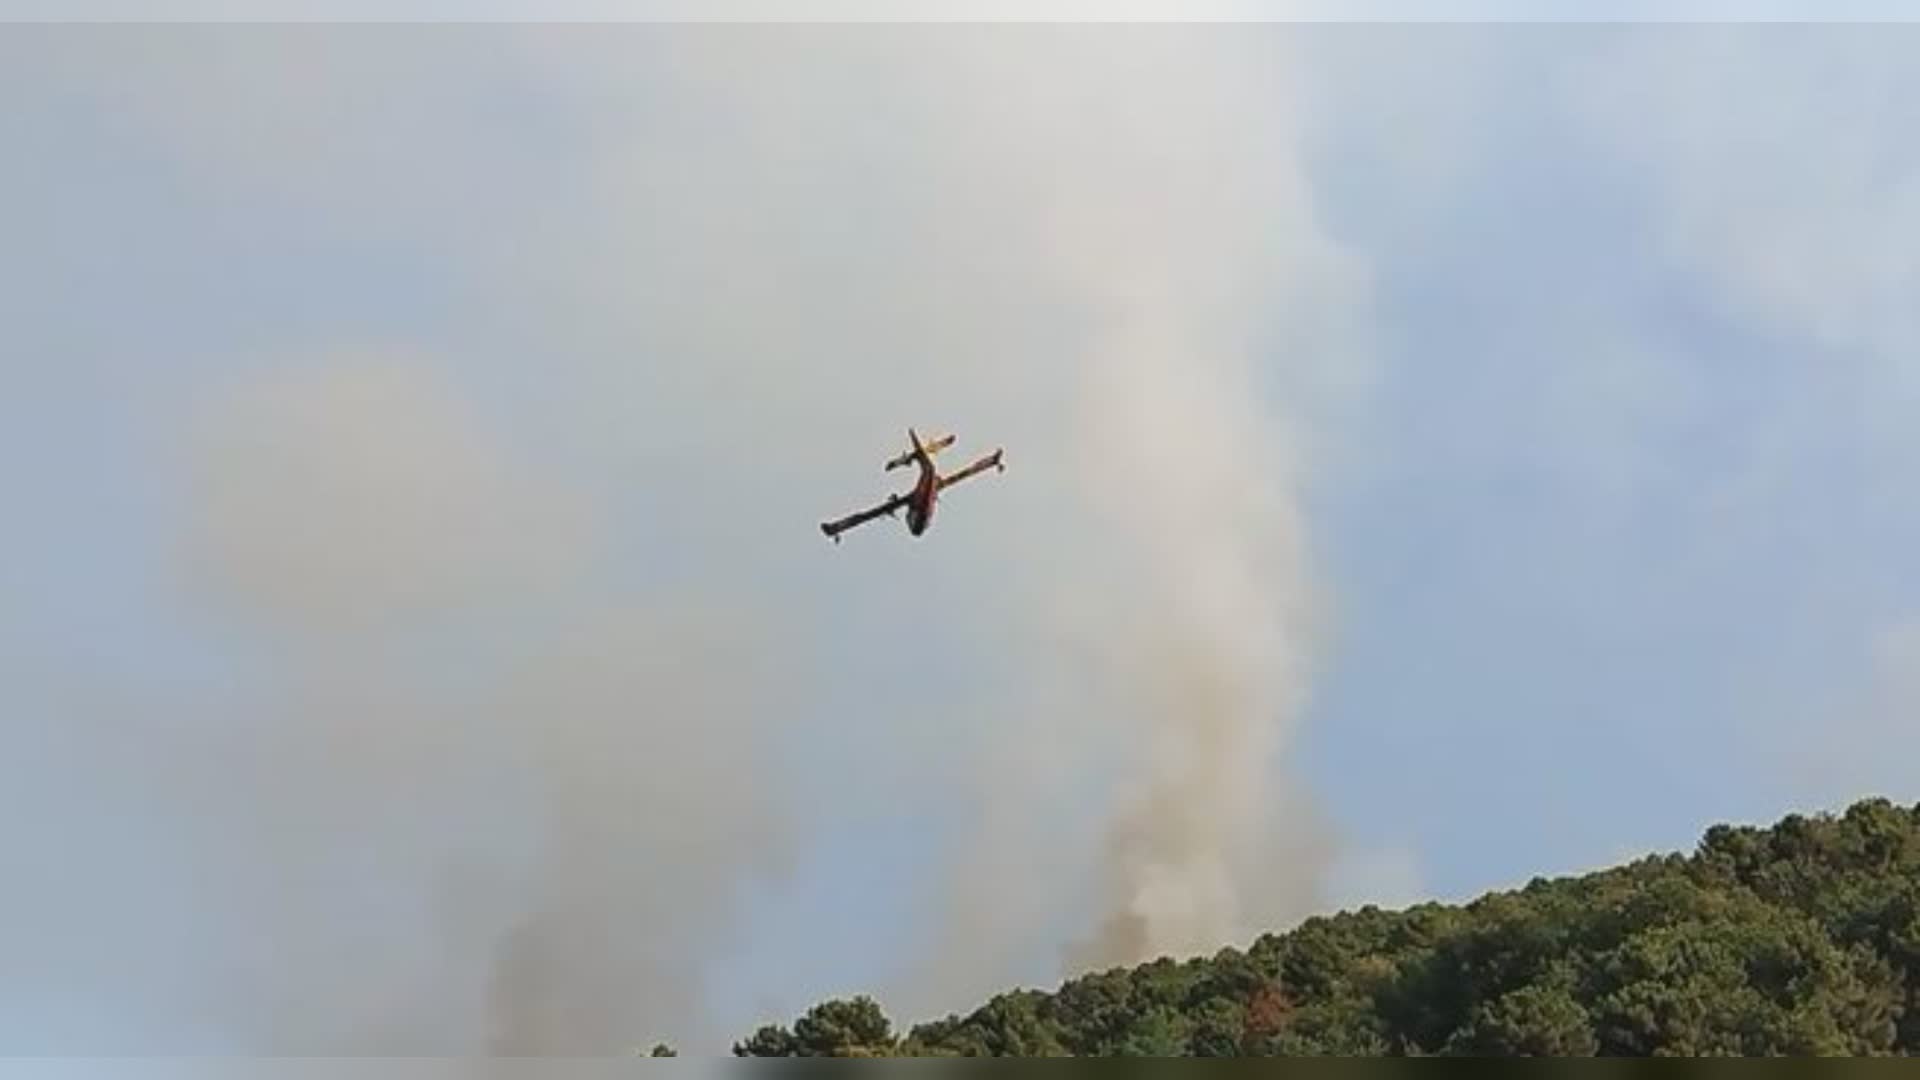 Incendi nell'imperiese, ancora fiamme a Ceriana: bruciati 260 ettari di bosco